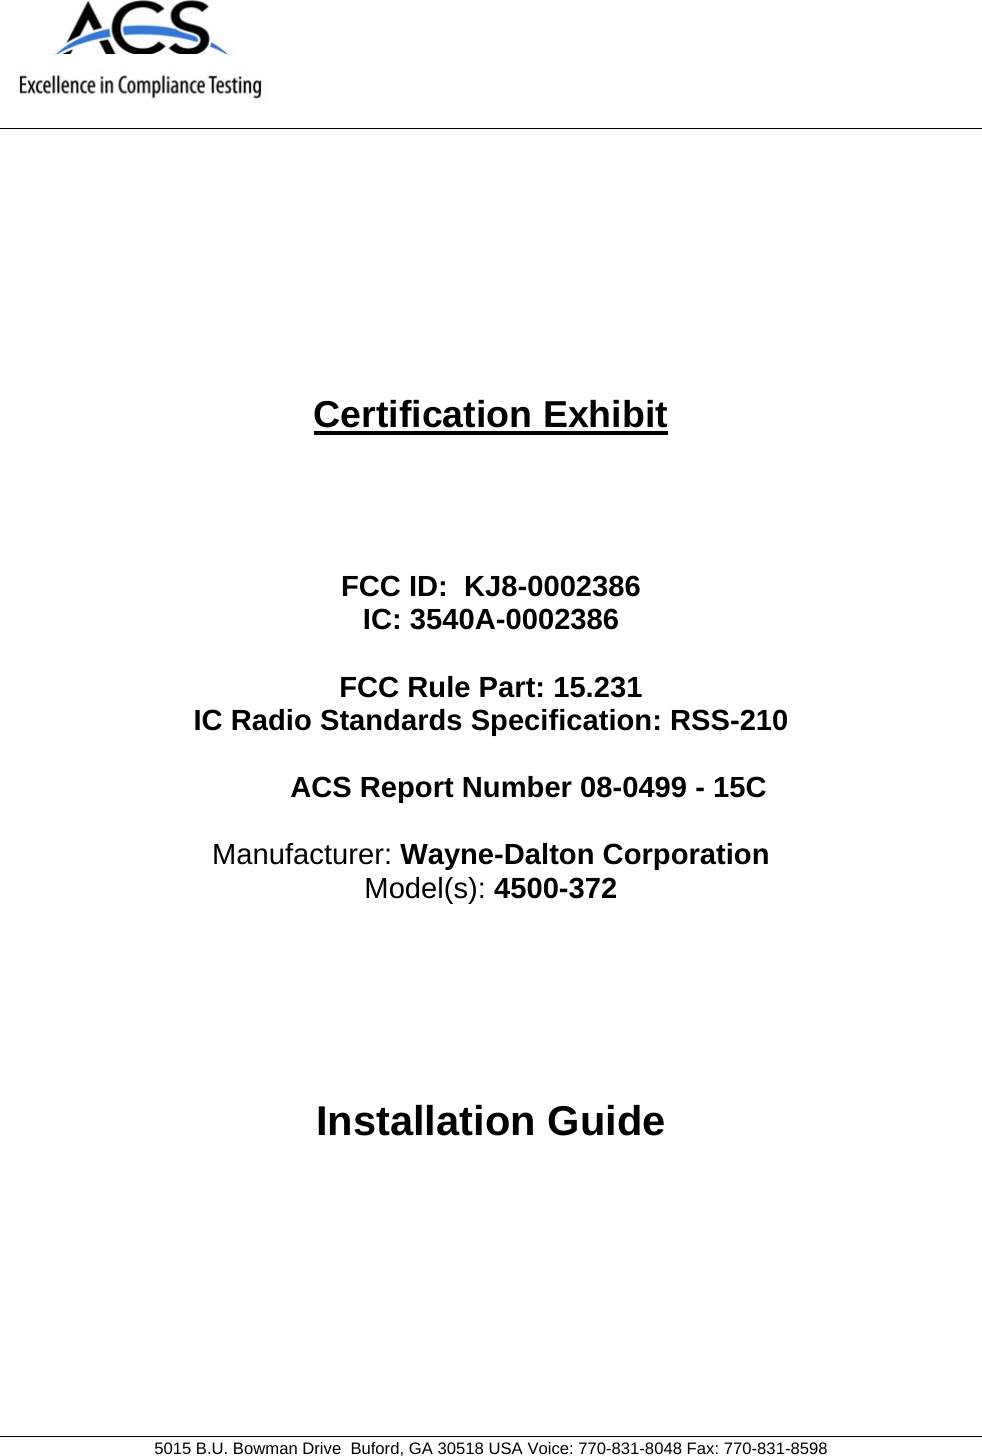     5015 B.U. Bowman Drive  Buford, GA 30518 USA Voice: 770-831-8048 Fax: 770-831-8598   Certification Exhibit     FCC ID:  KJ8-0002386 IC: 3540A-0002386  FCC Rule Part: 15.231 IC Radio Standards Specification: RSS-210  ACS Report Number 08-0499 - 15C   Manufacturer: Wayne-Dalton Corporation Model(s): 4500-372     Installation Guide  